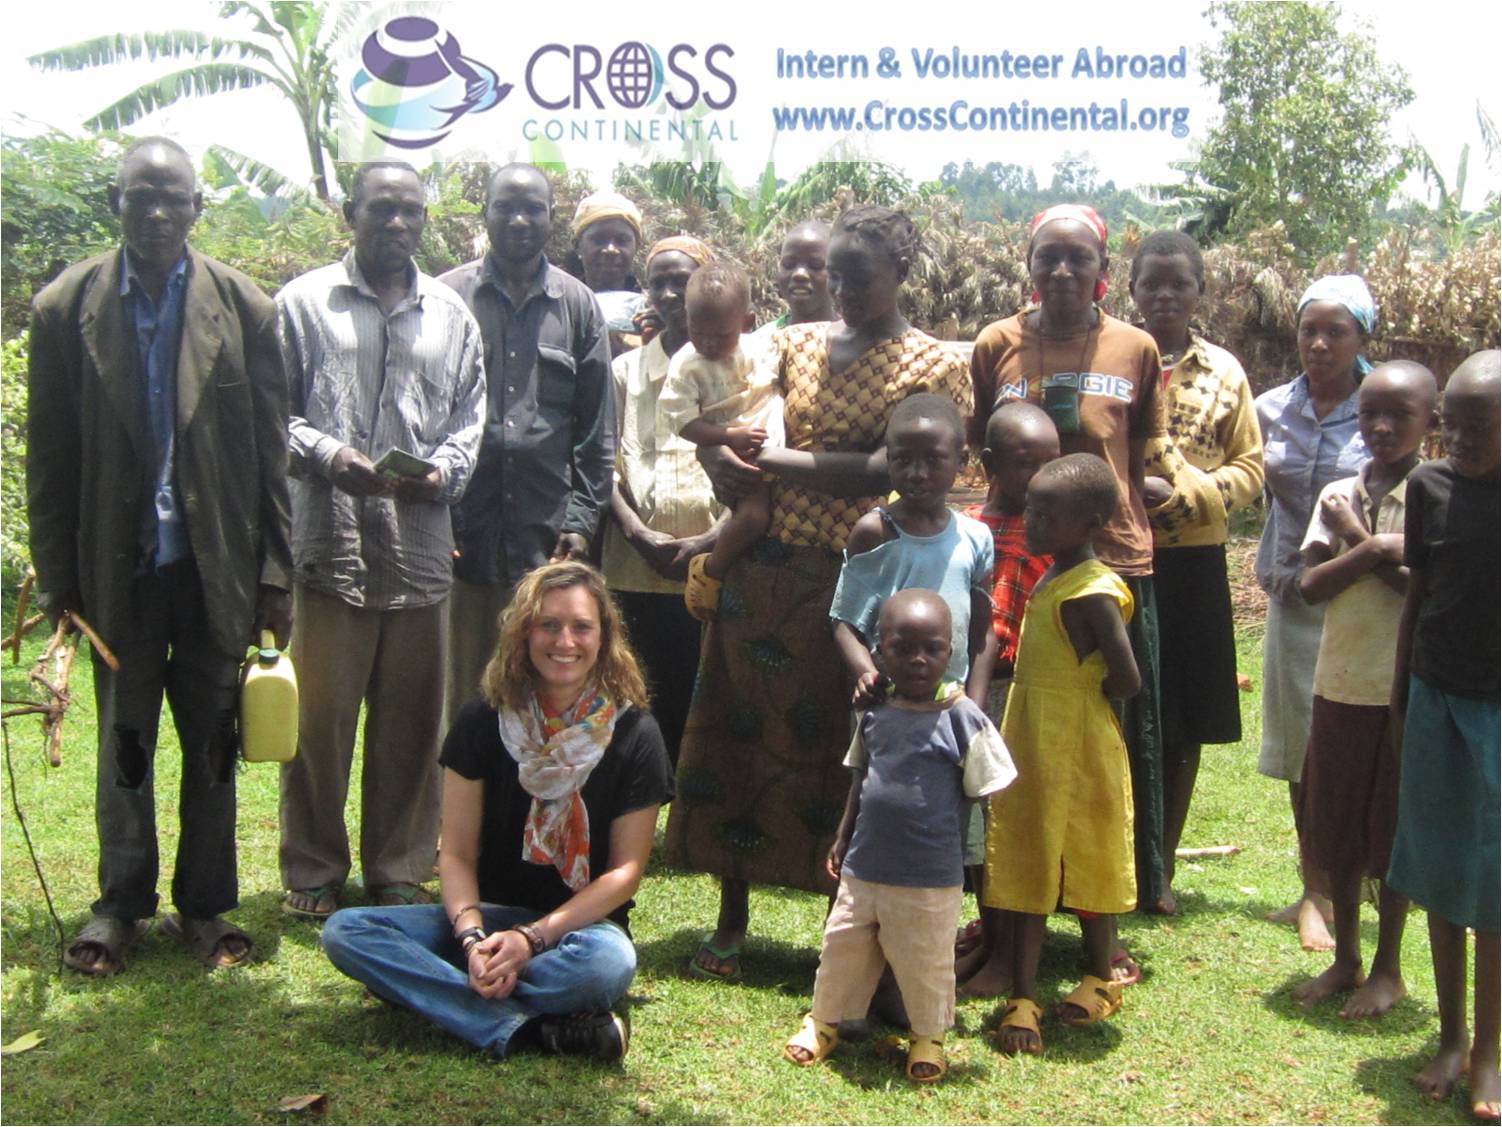 International Internships and Volunteer Abroad Programs in Microfinance